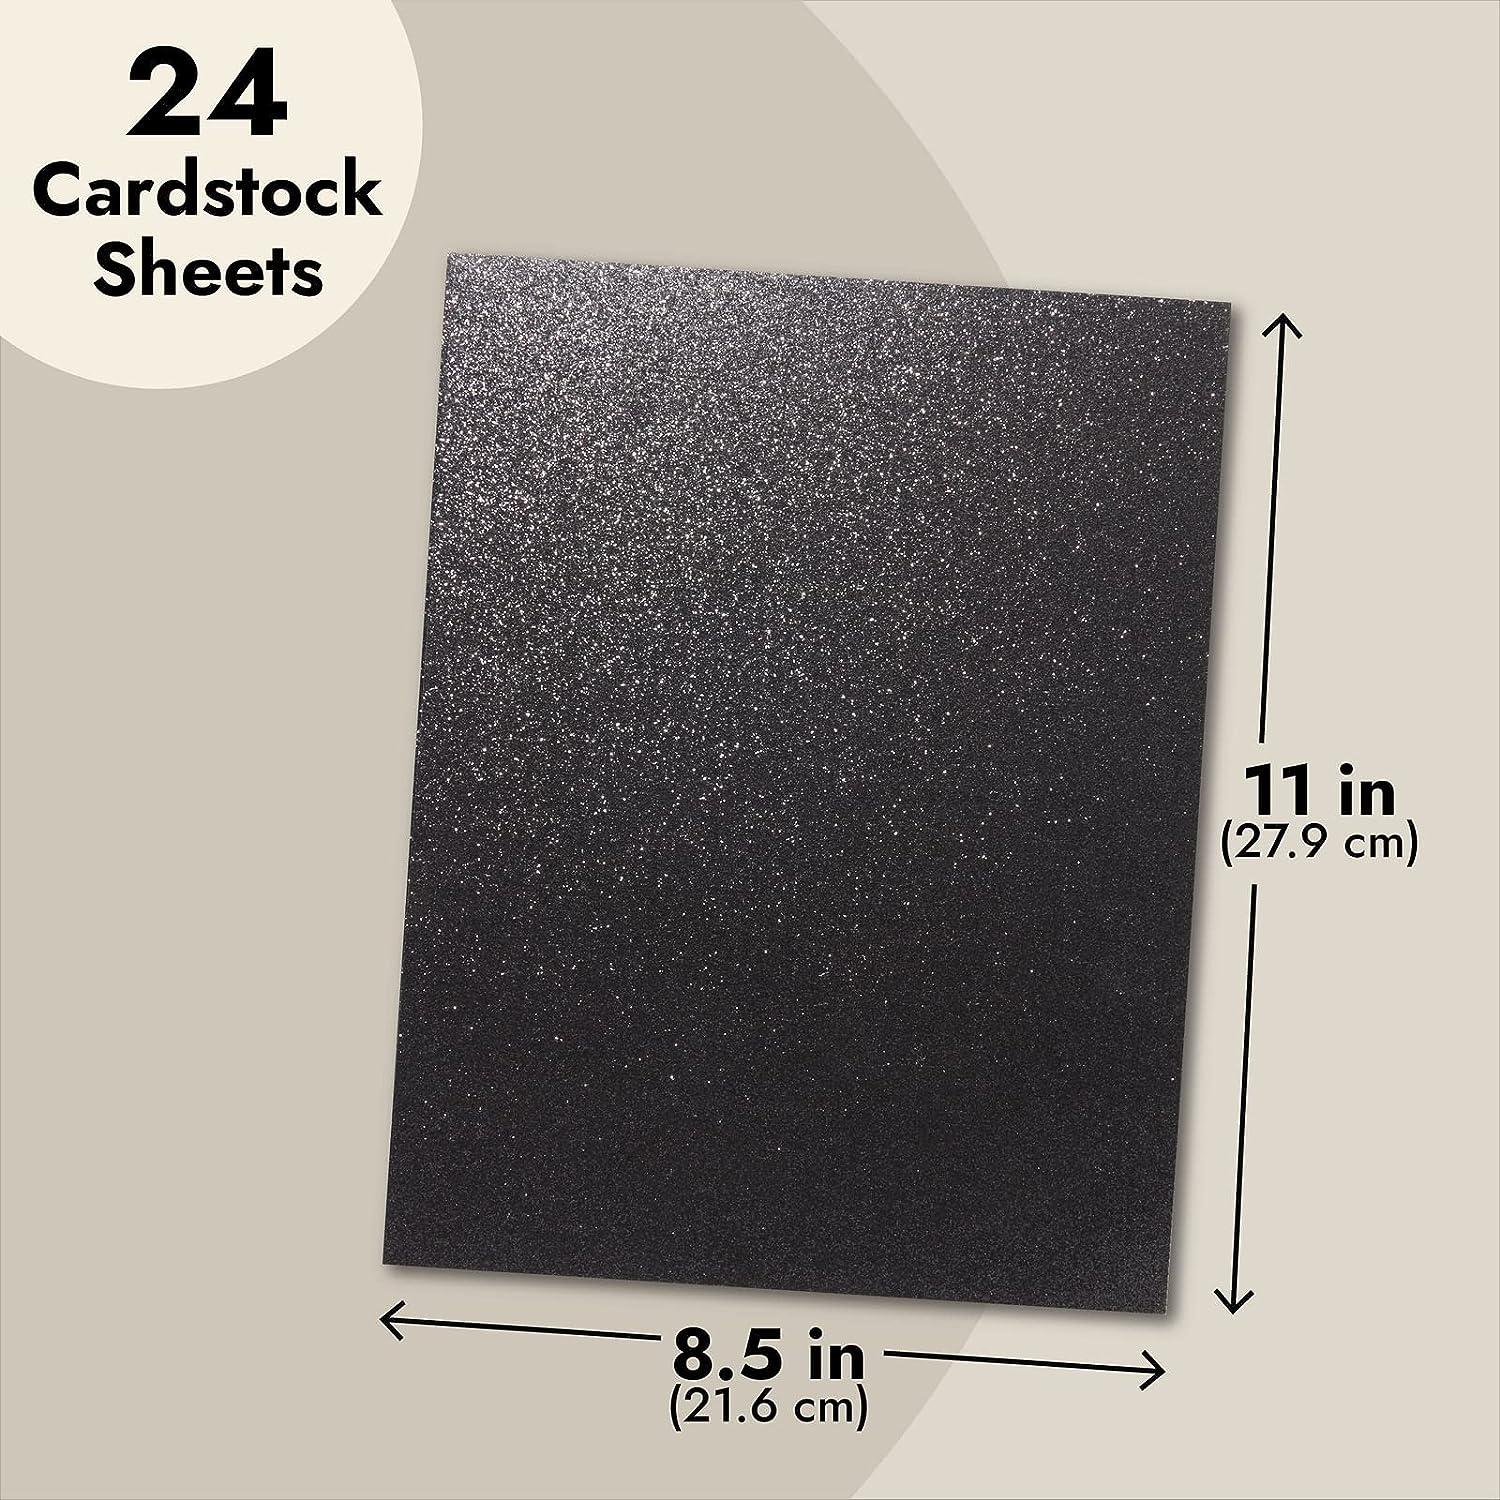 Double-sided Black Glitter Cardstock 12x12 - Goefun 24 Sheets 300 GSM/110LB  Black Cardstock Paper for Cricut, DIY Crafts, Halloween, Scrapbooking